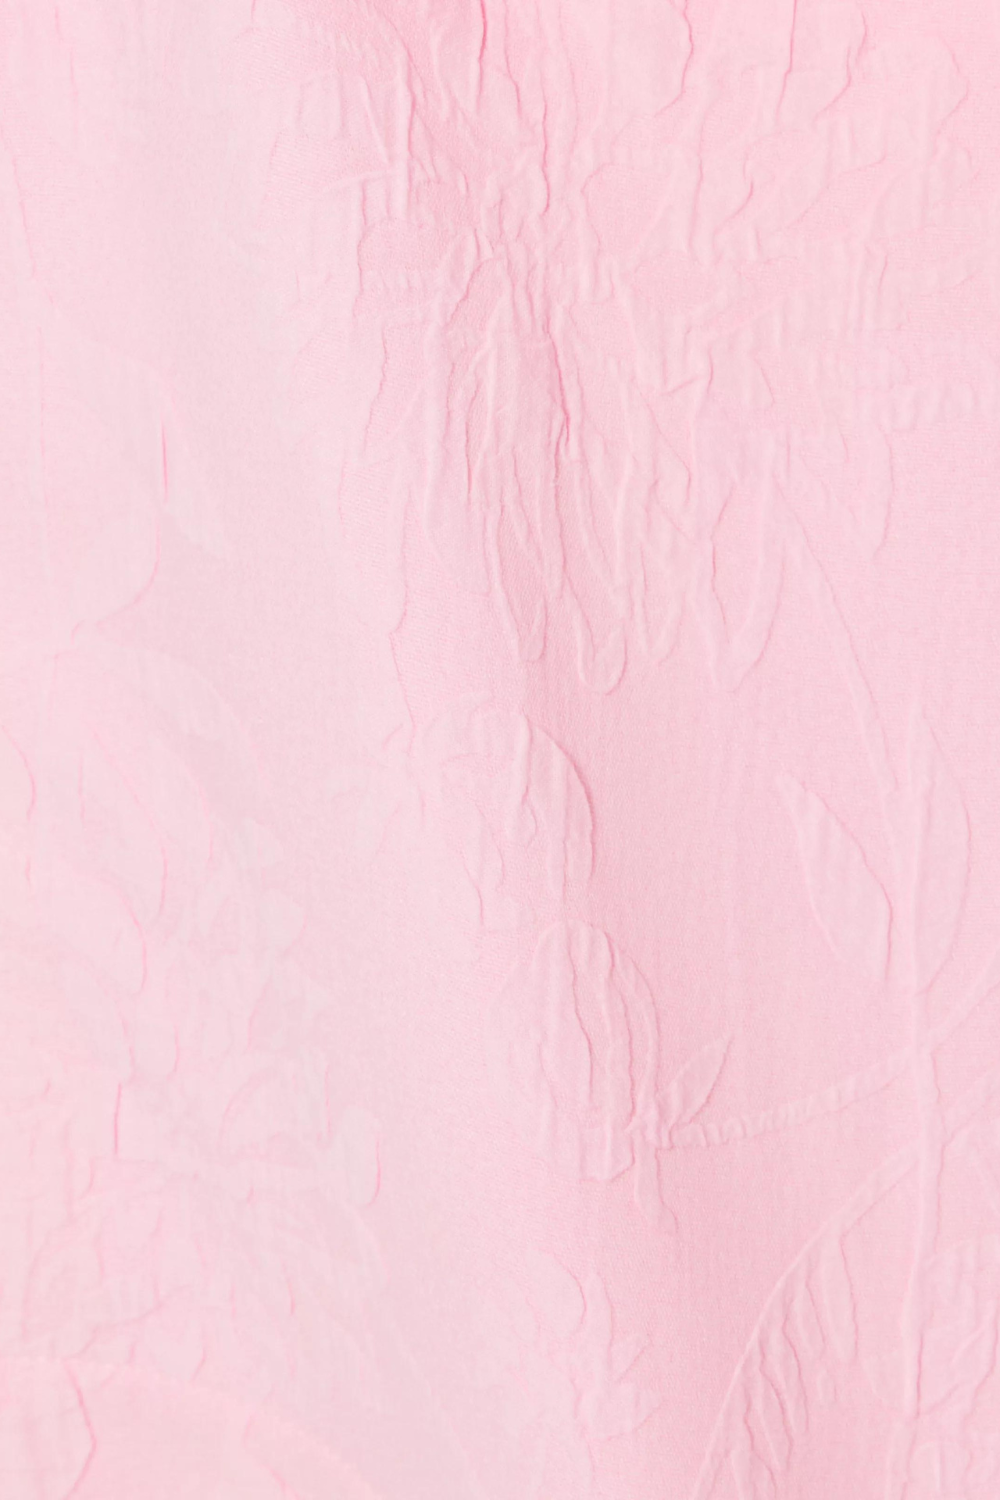 Lilly Pulitzer Zoya Ruffle Top - Conch Shell Pink